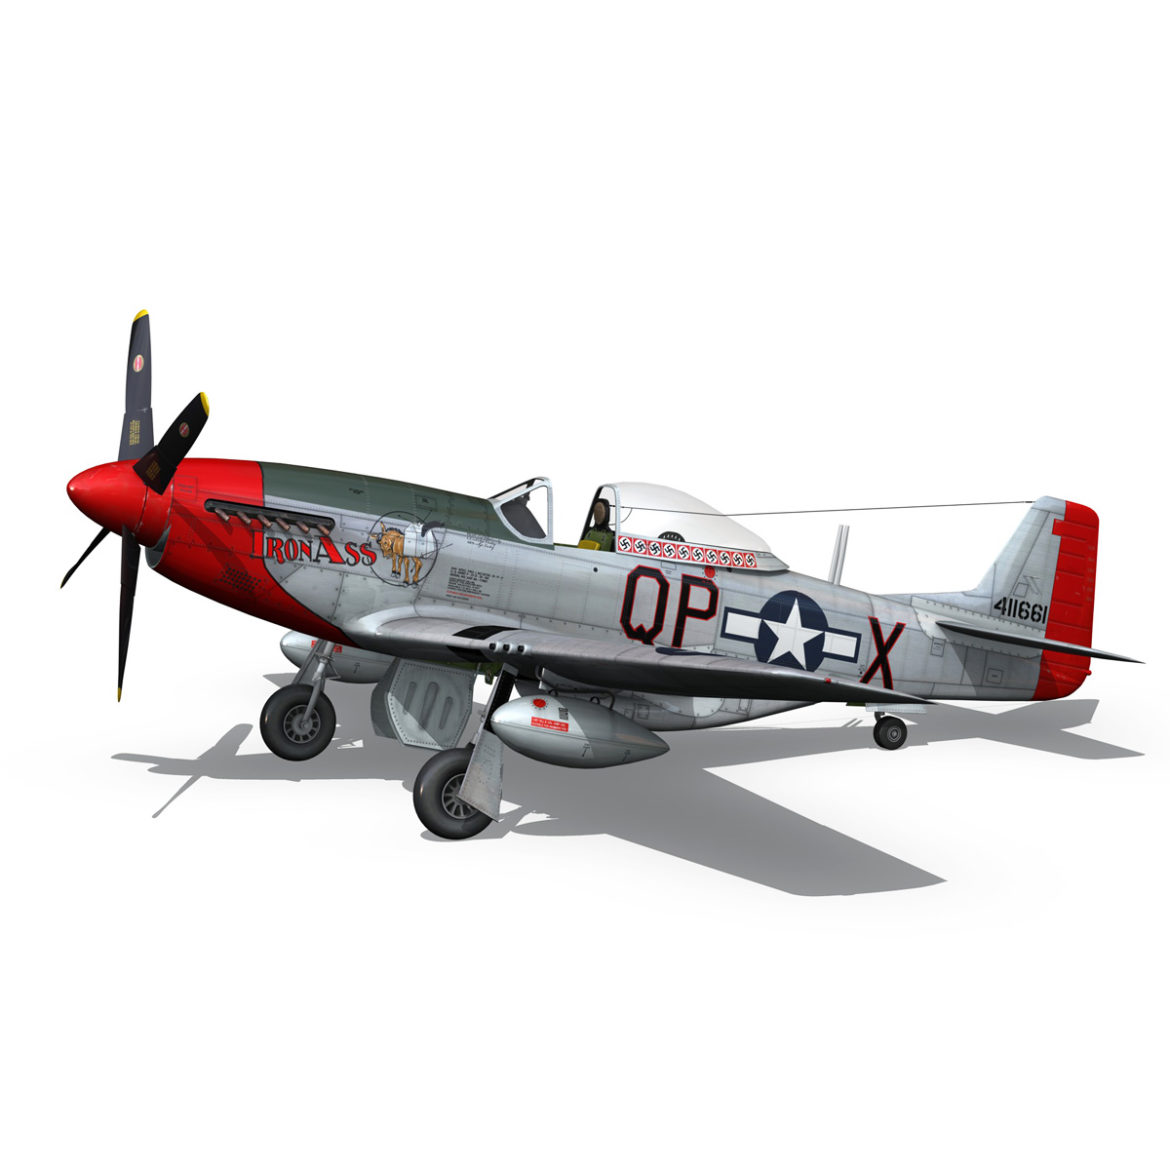 north american p-51d mustang – iron ass 3d model fbx c4d lwo obj 294284